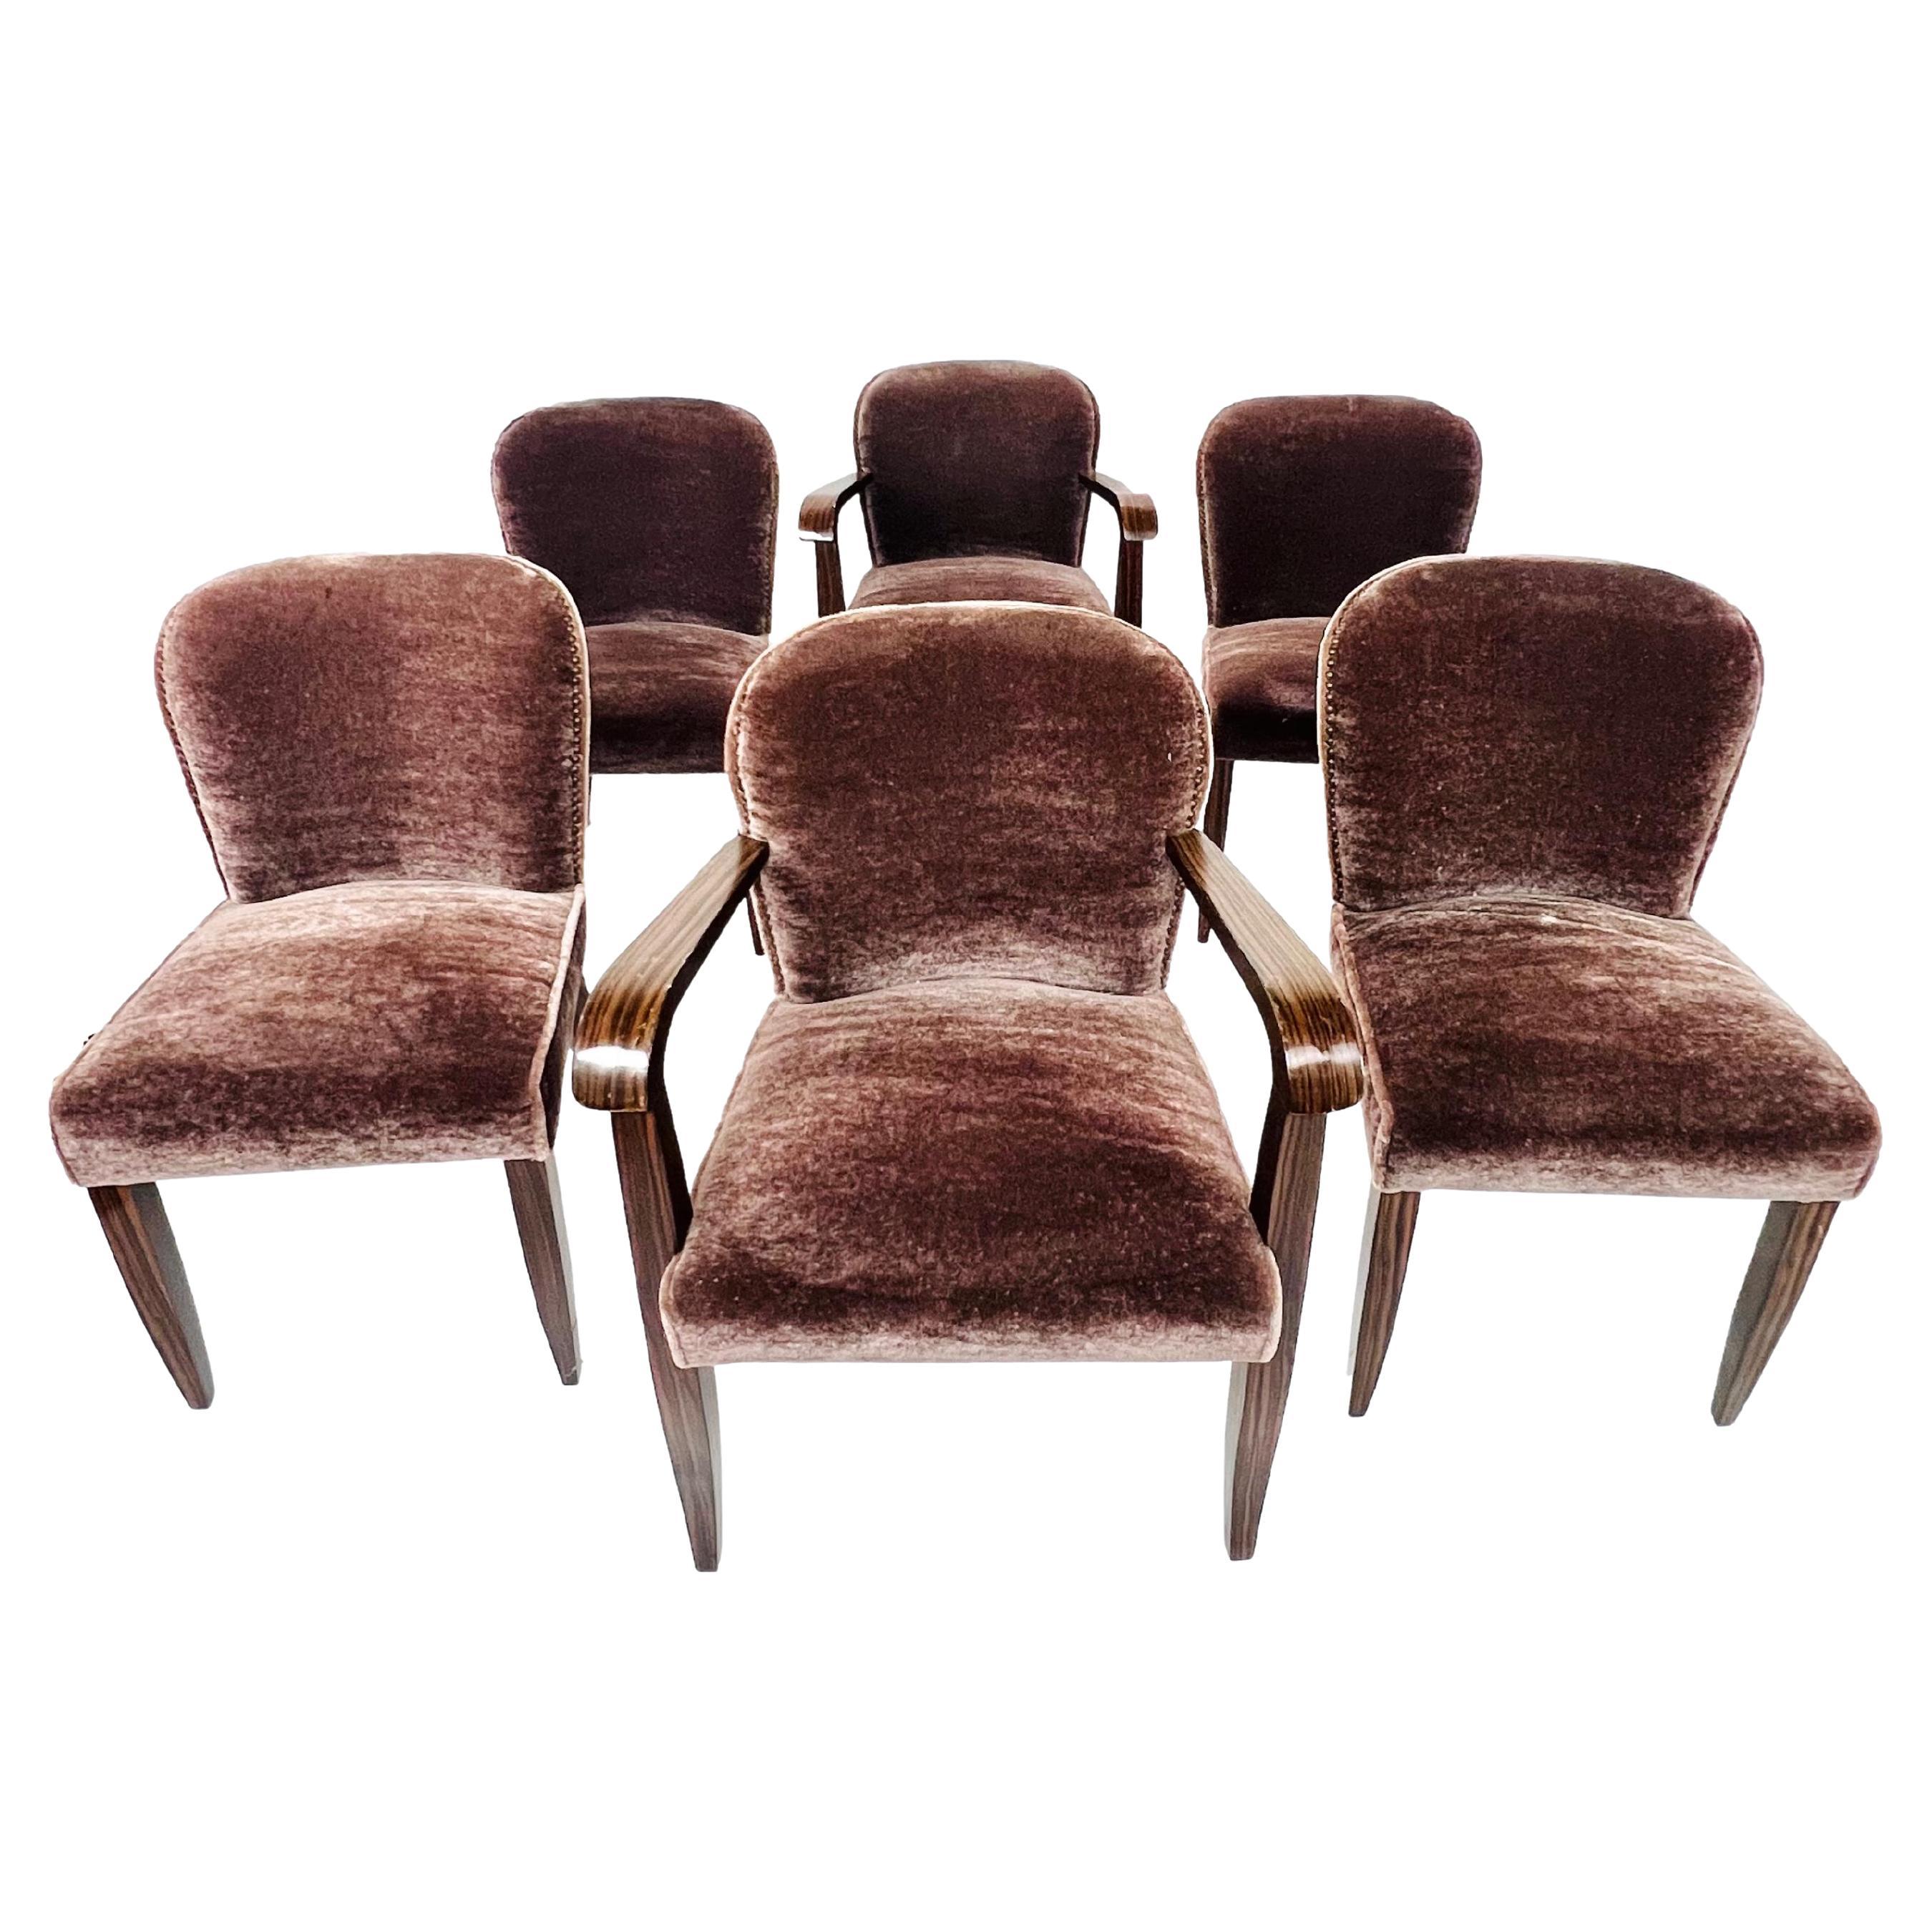 Set of 6 Macassar Art Deco Dining Chairs